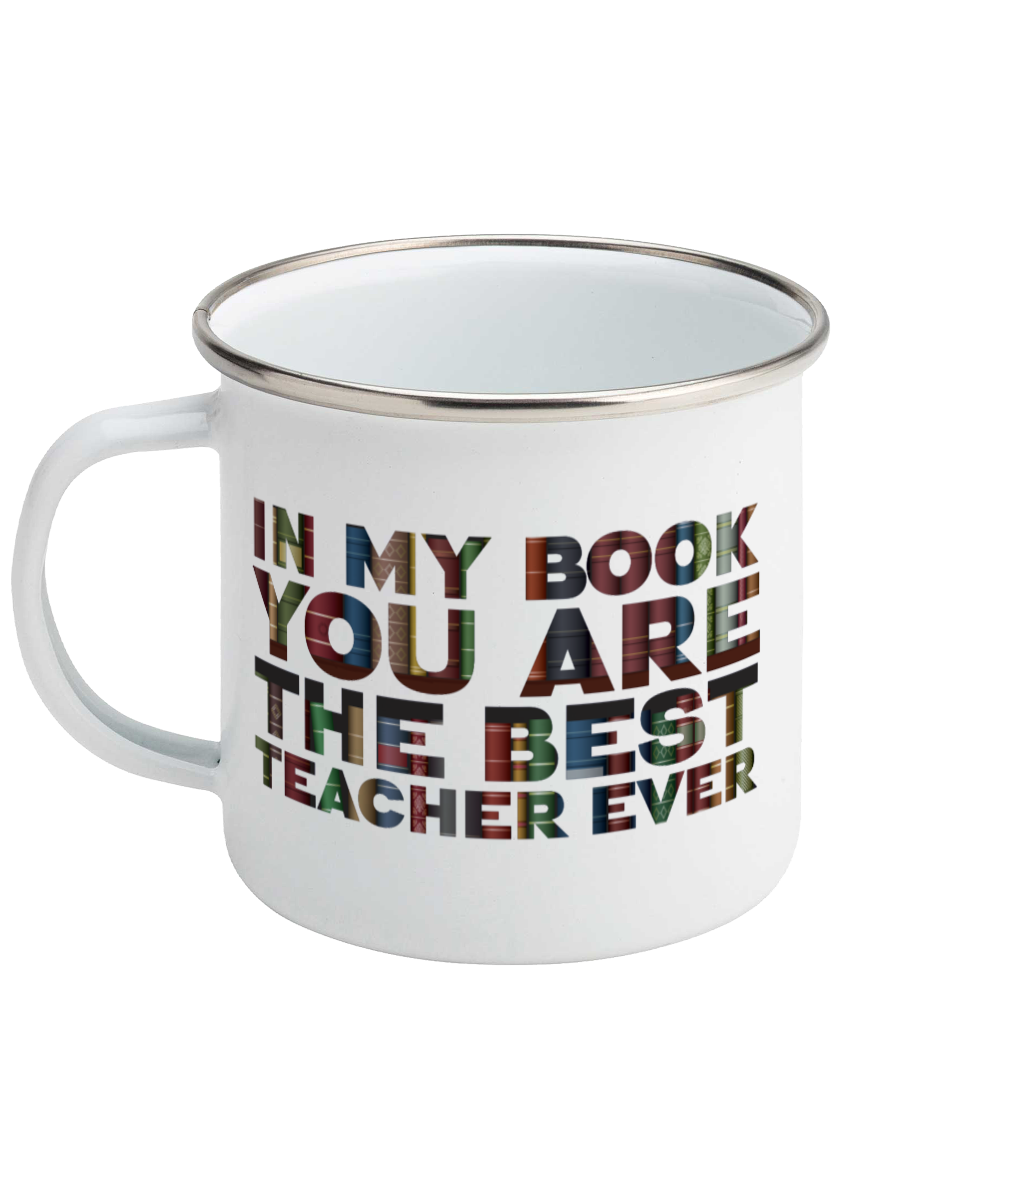 Enamel Mug "In my book you are the best teacher ever", Teacher gift